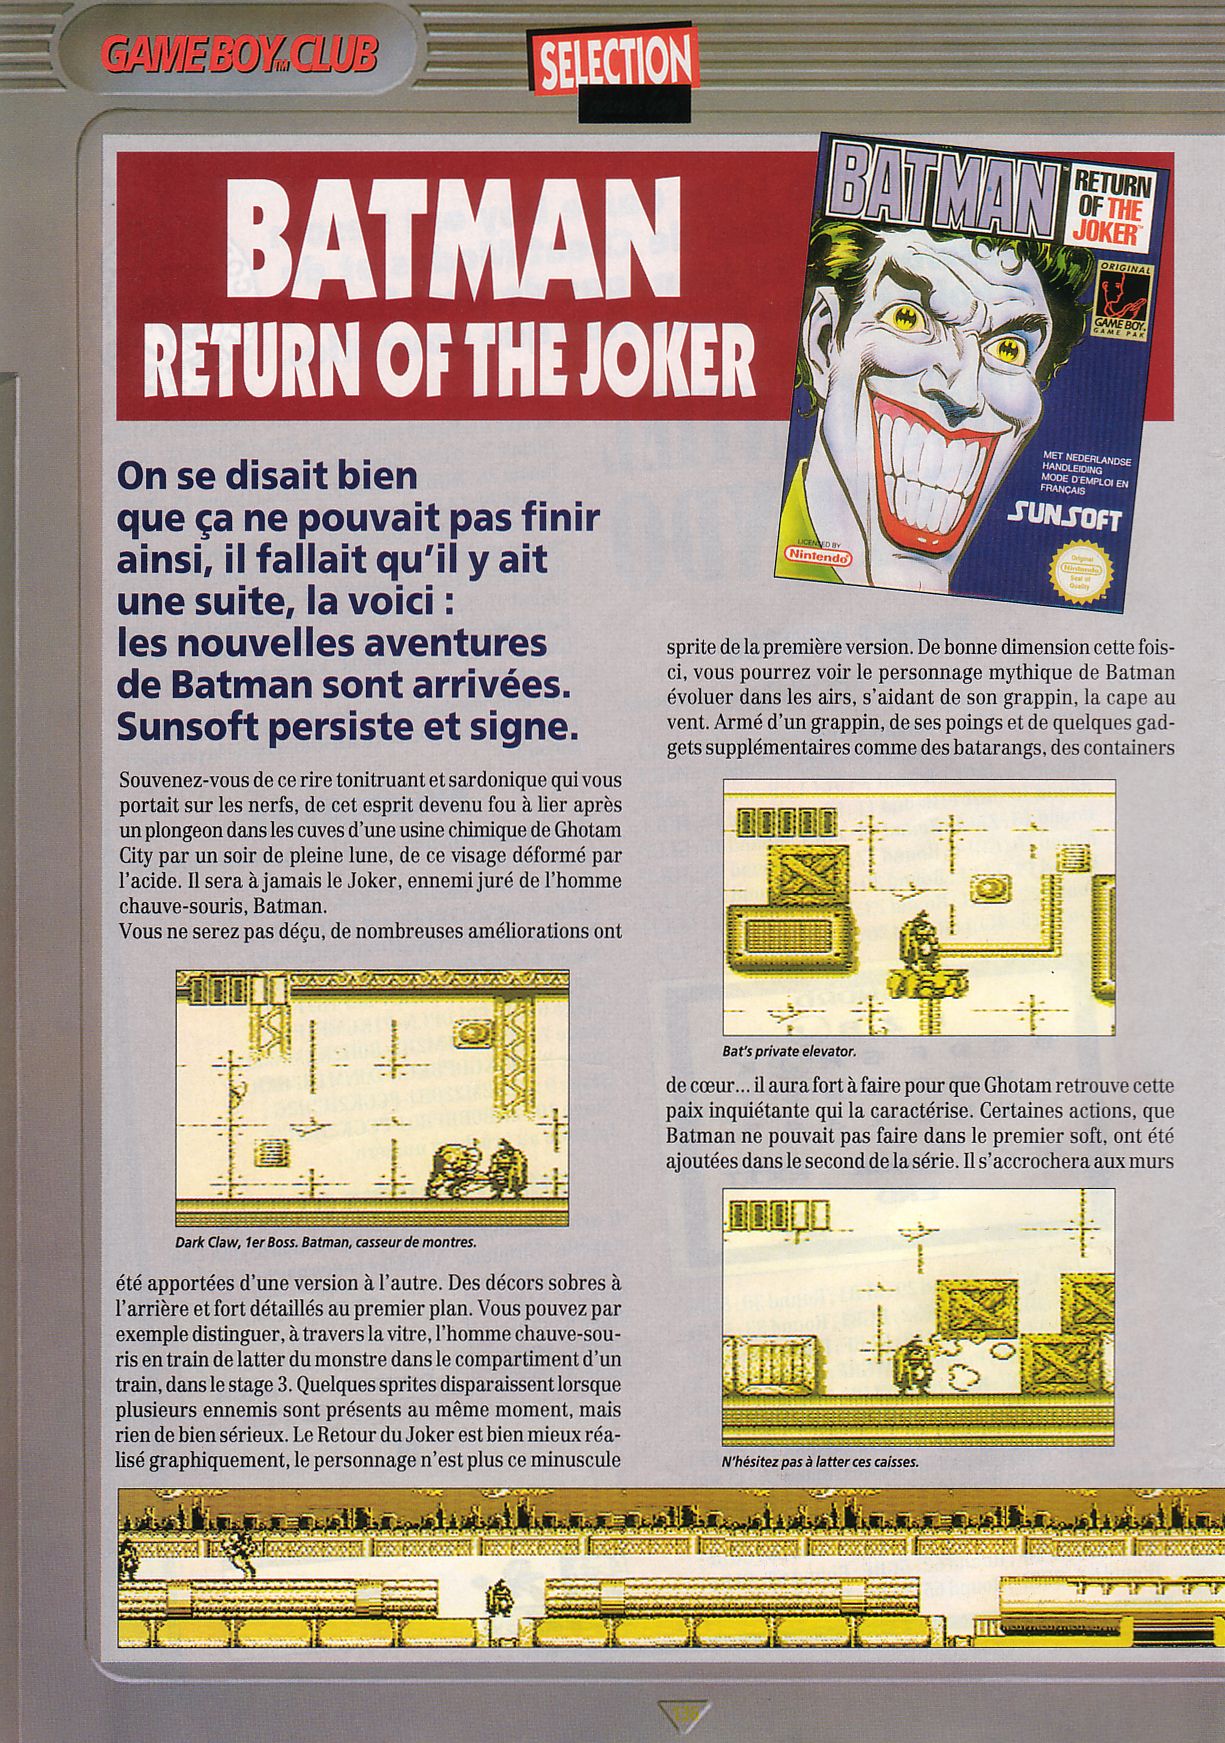 tests//592/Nintendo Player 007 - Page 136 (1992-11-12).jpg